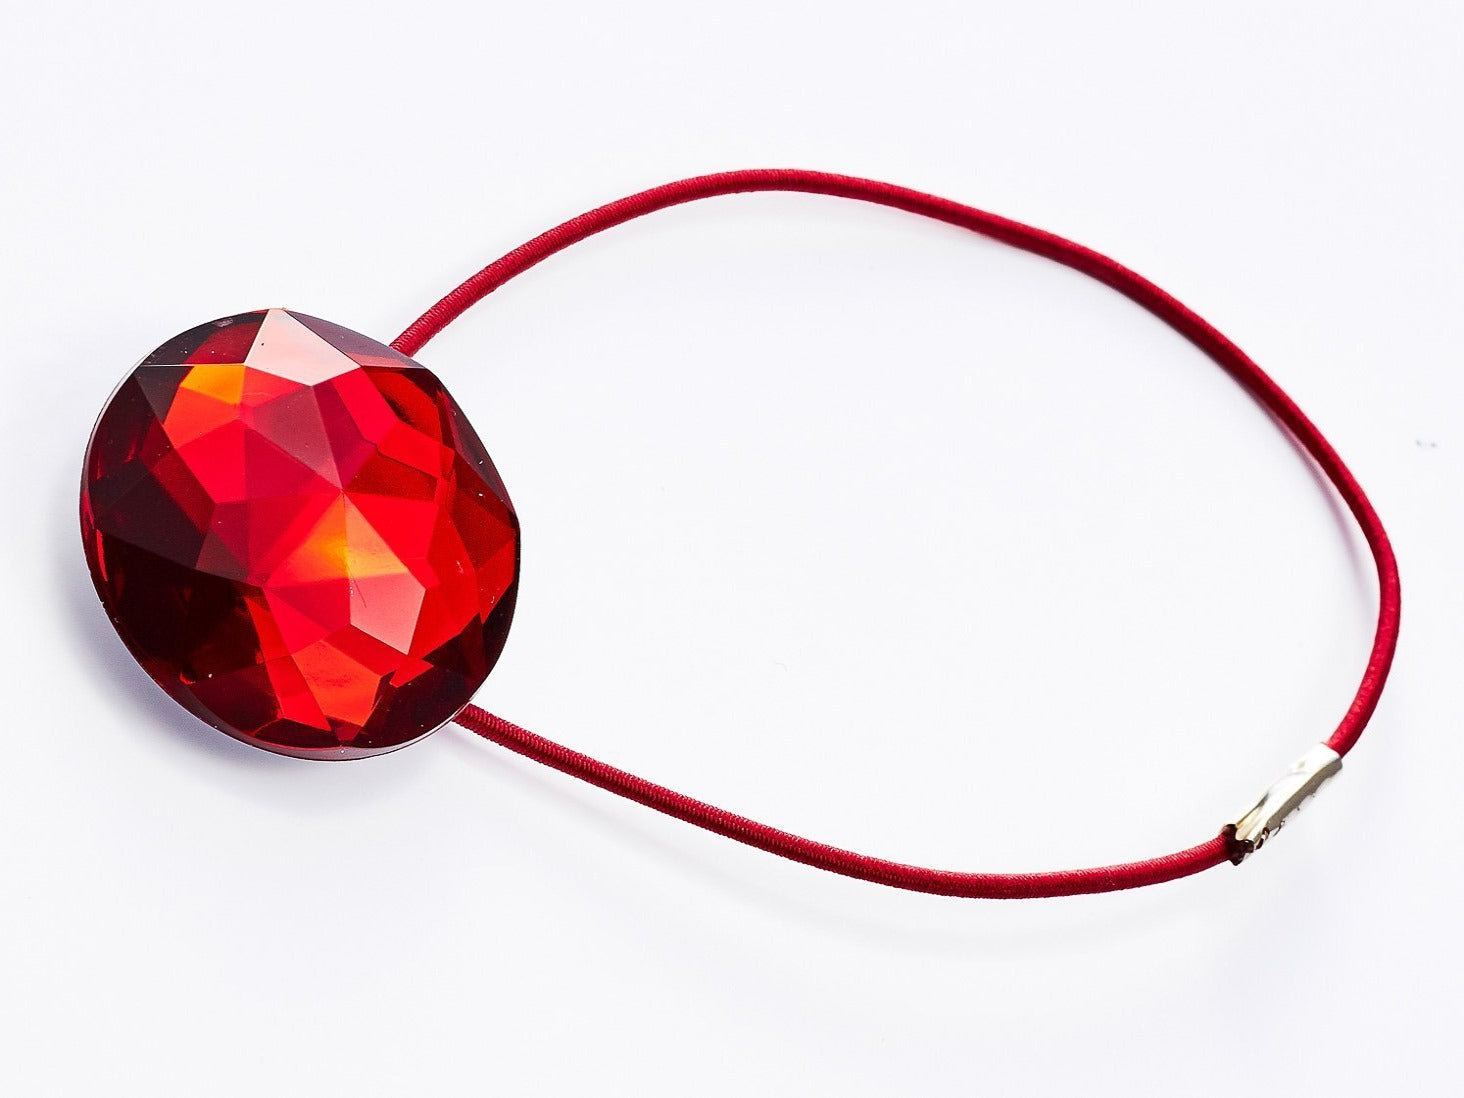 Sample Ruby Heart Gemstone Gift Box Closure